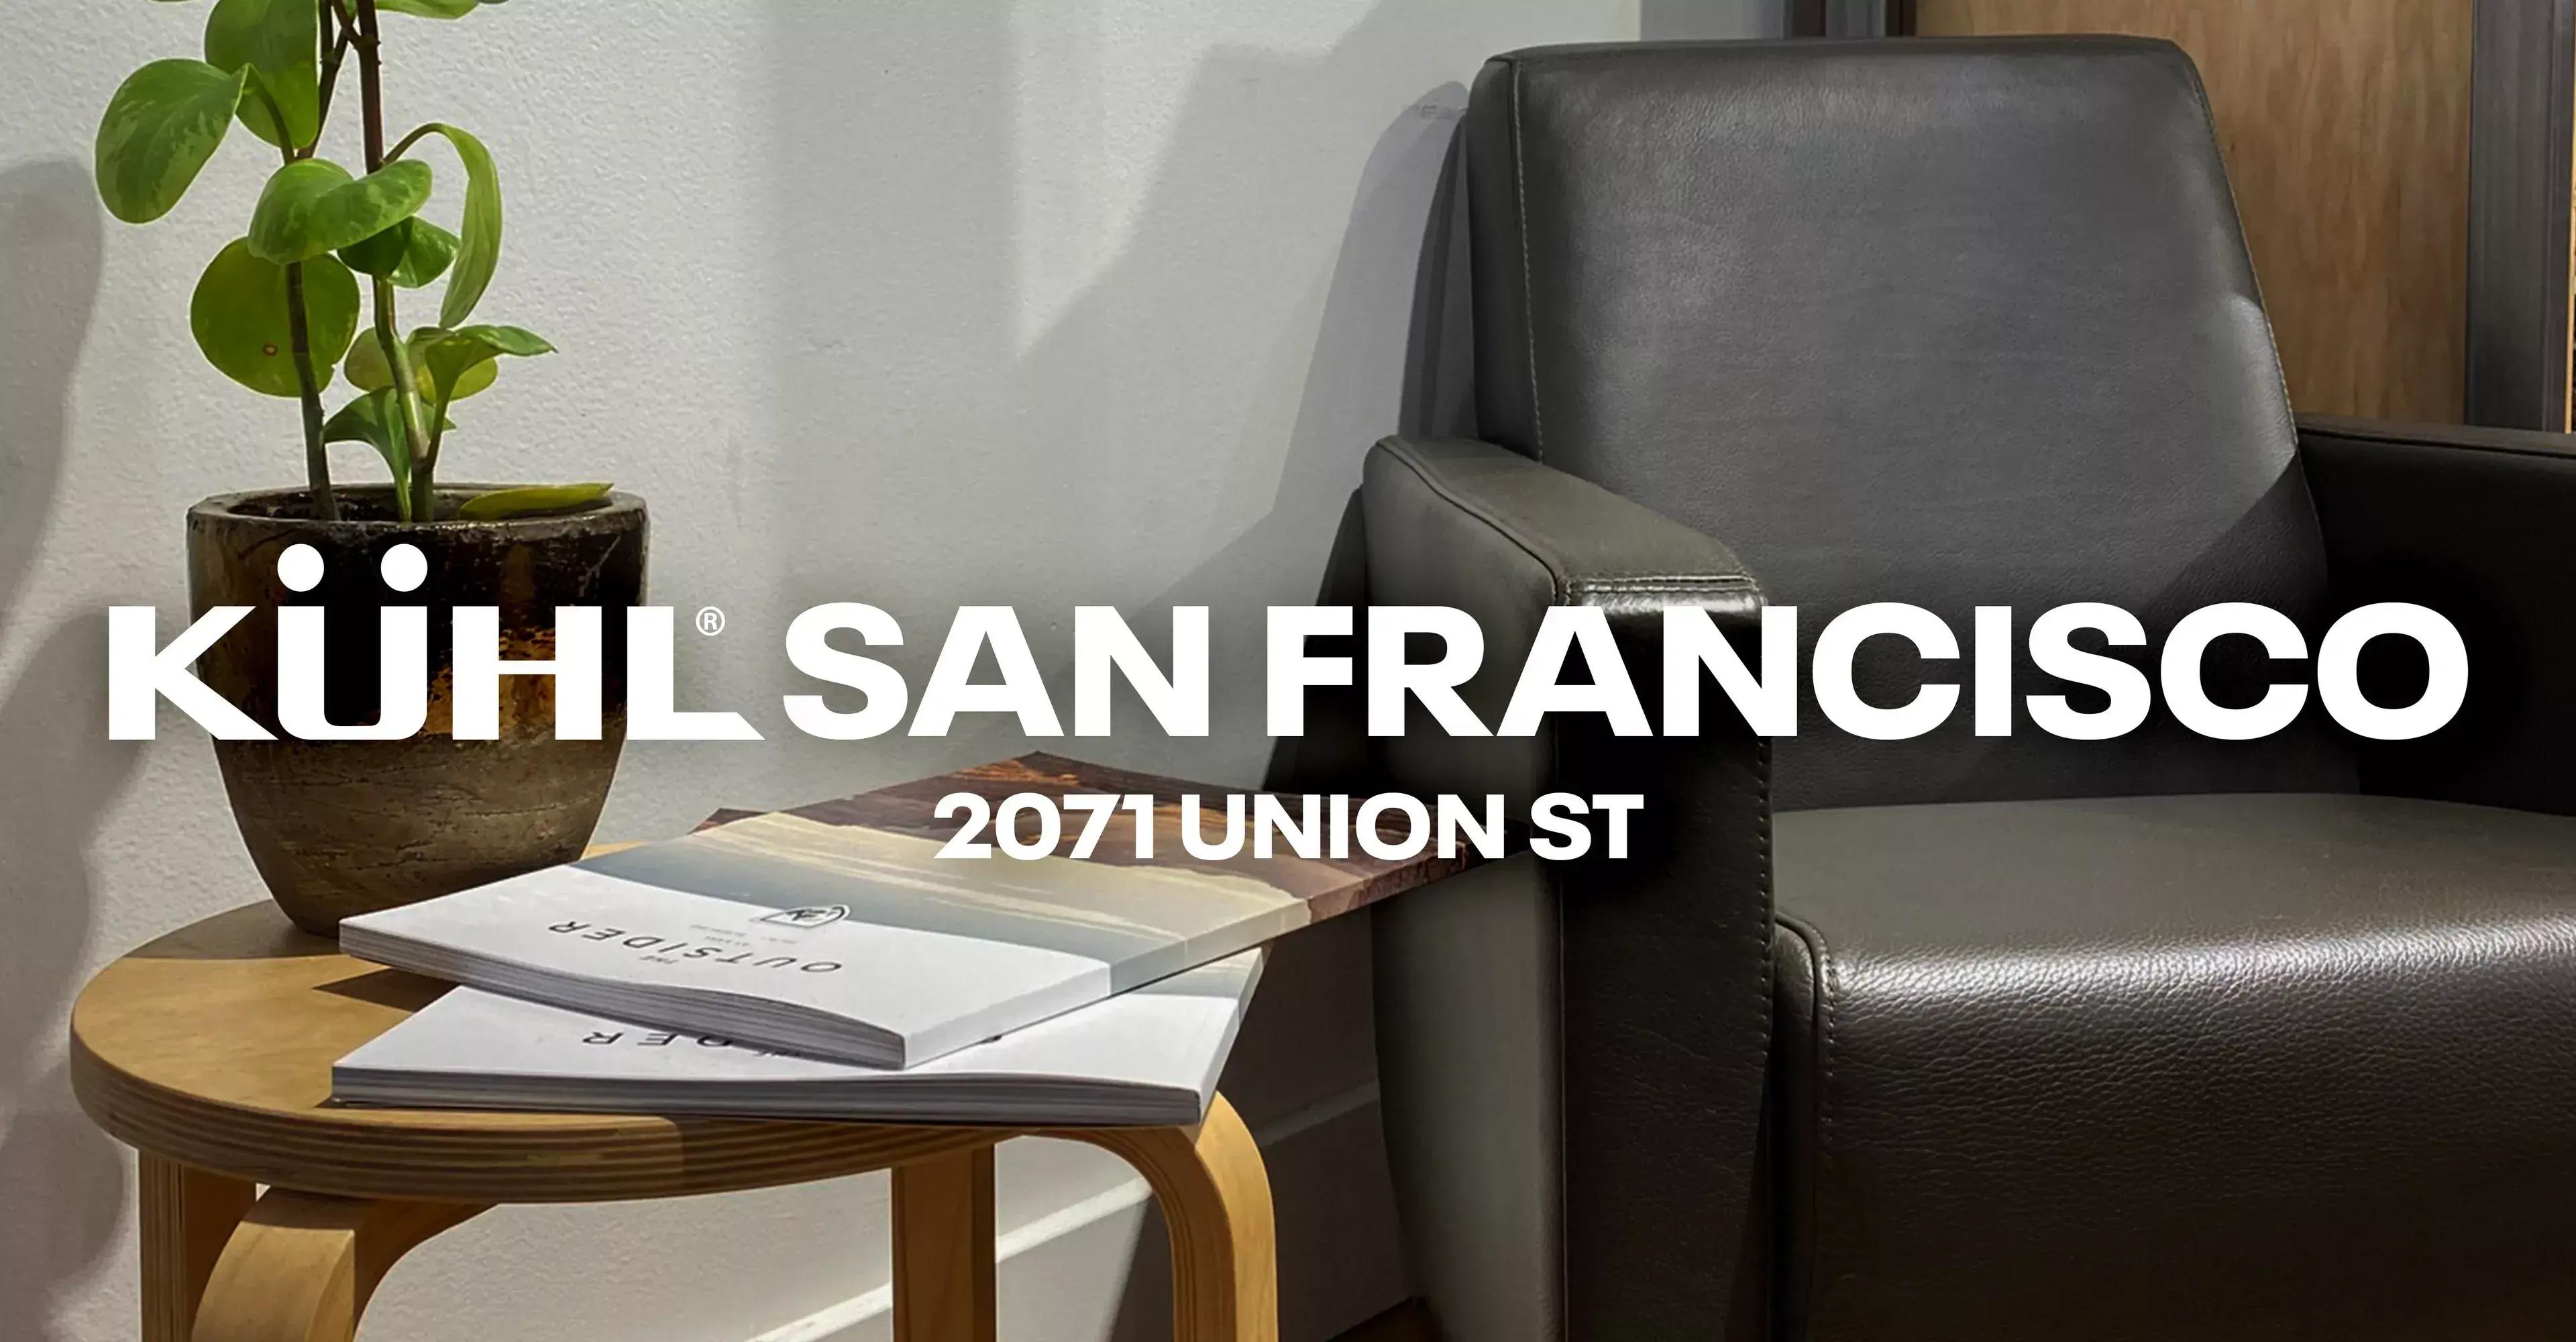 The lounge area of Kühl San Francisco 2071 Union Street.